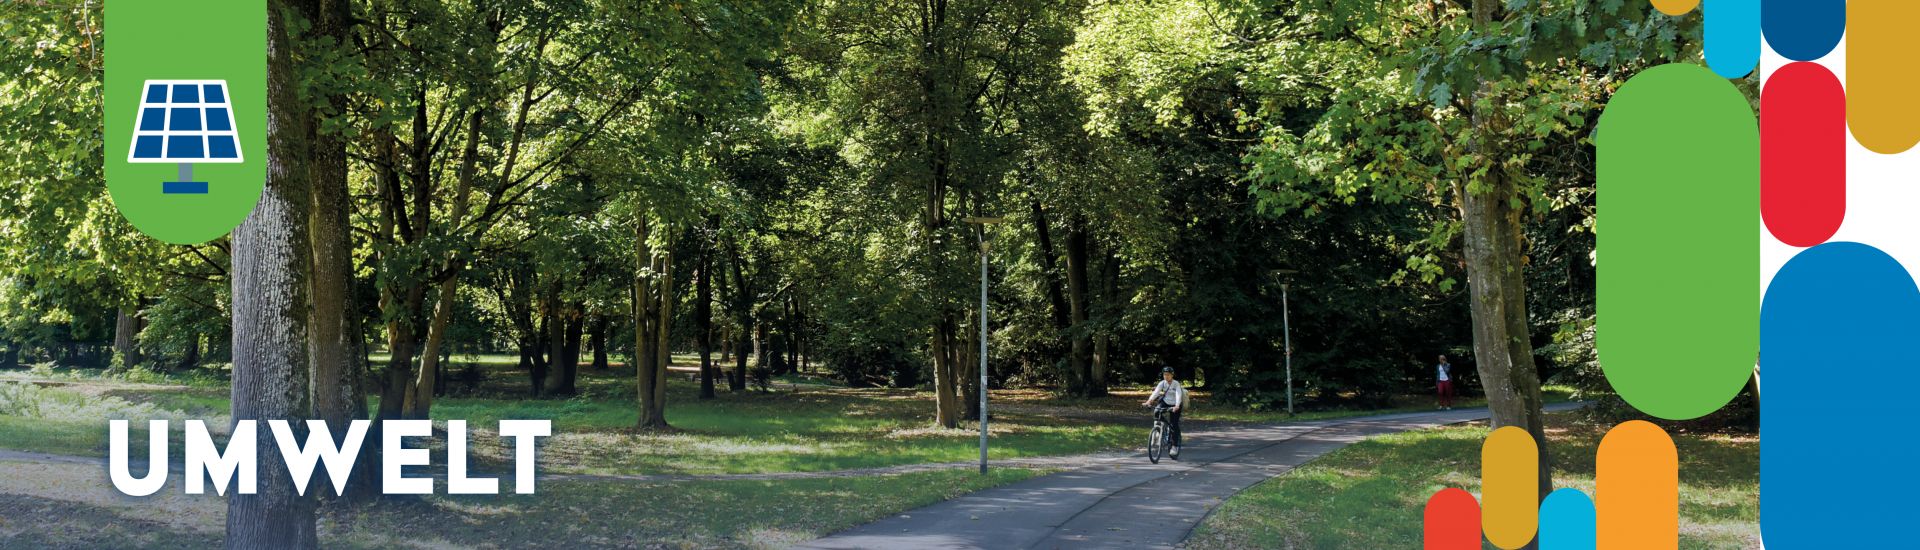 Grüne Bäume, Wiese, Fahrradfahrer